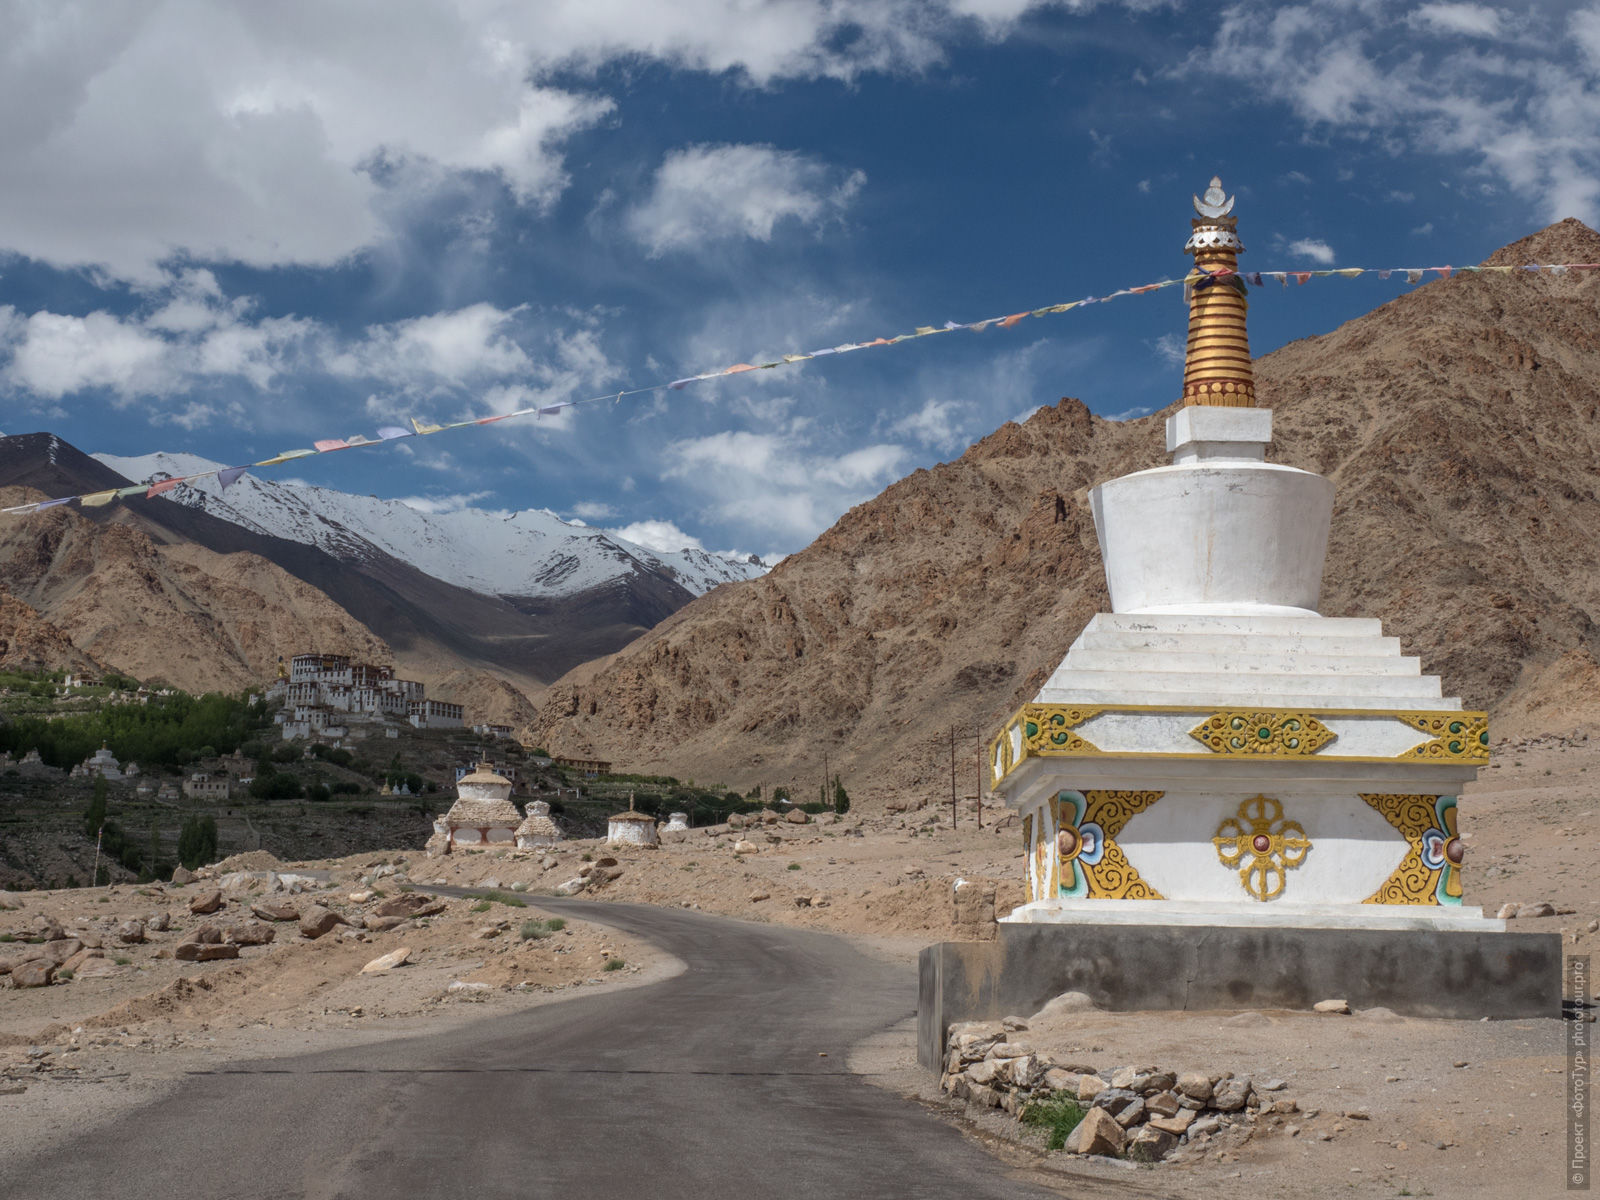 Road to the Buddhist monastery Likir, Ladakh womens tour, August 31 - September 14, 2019.